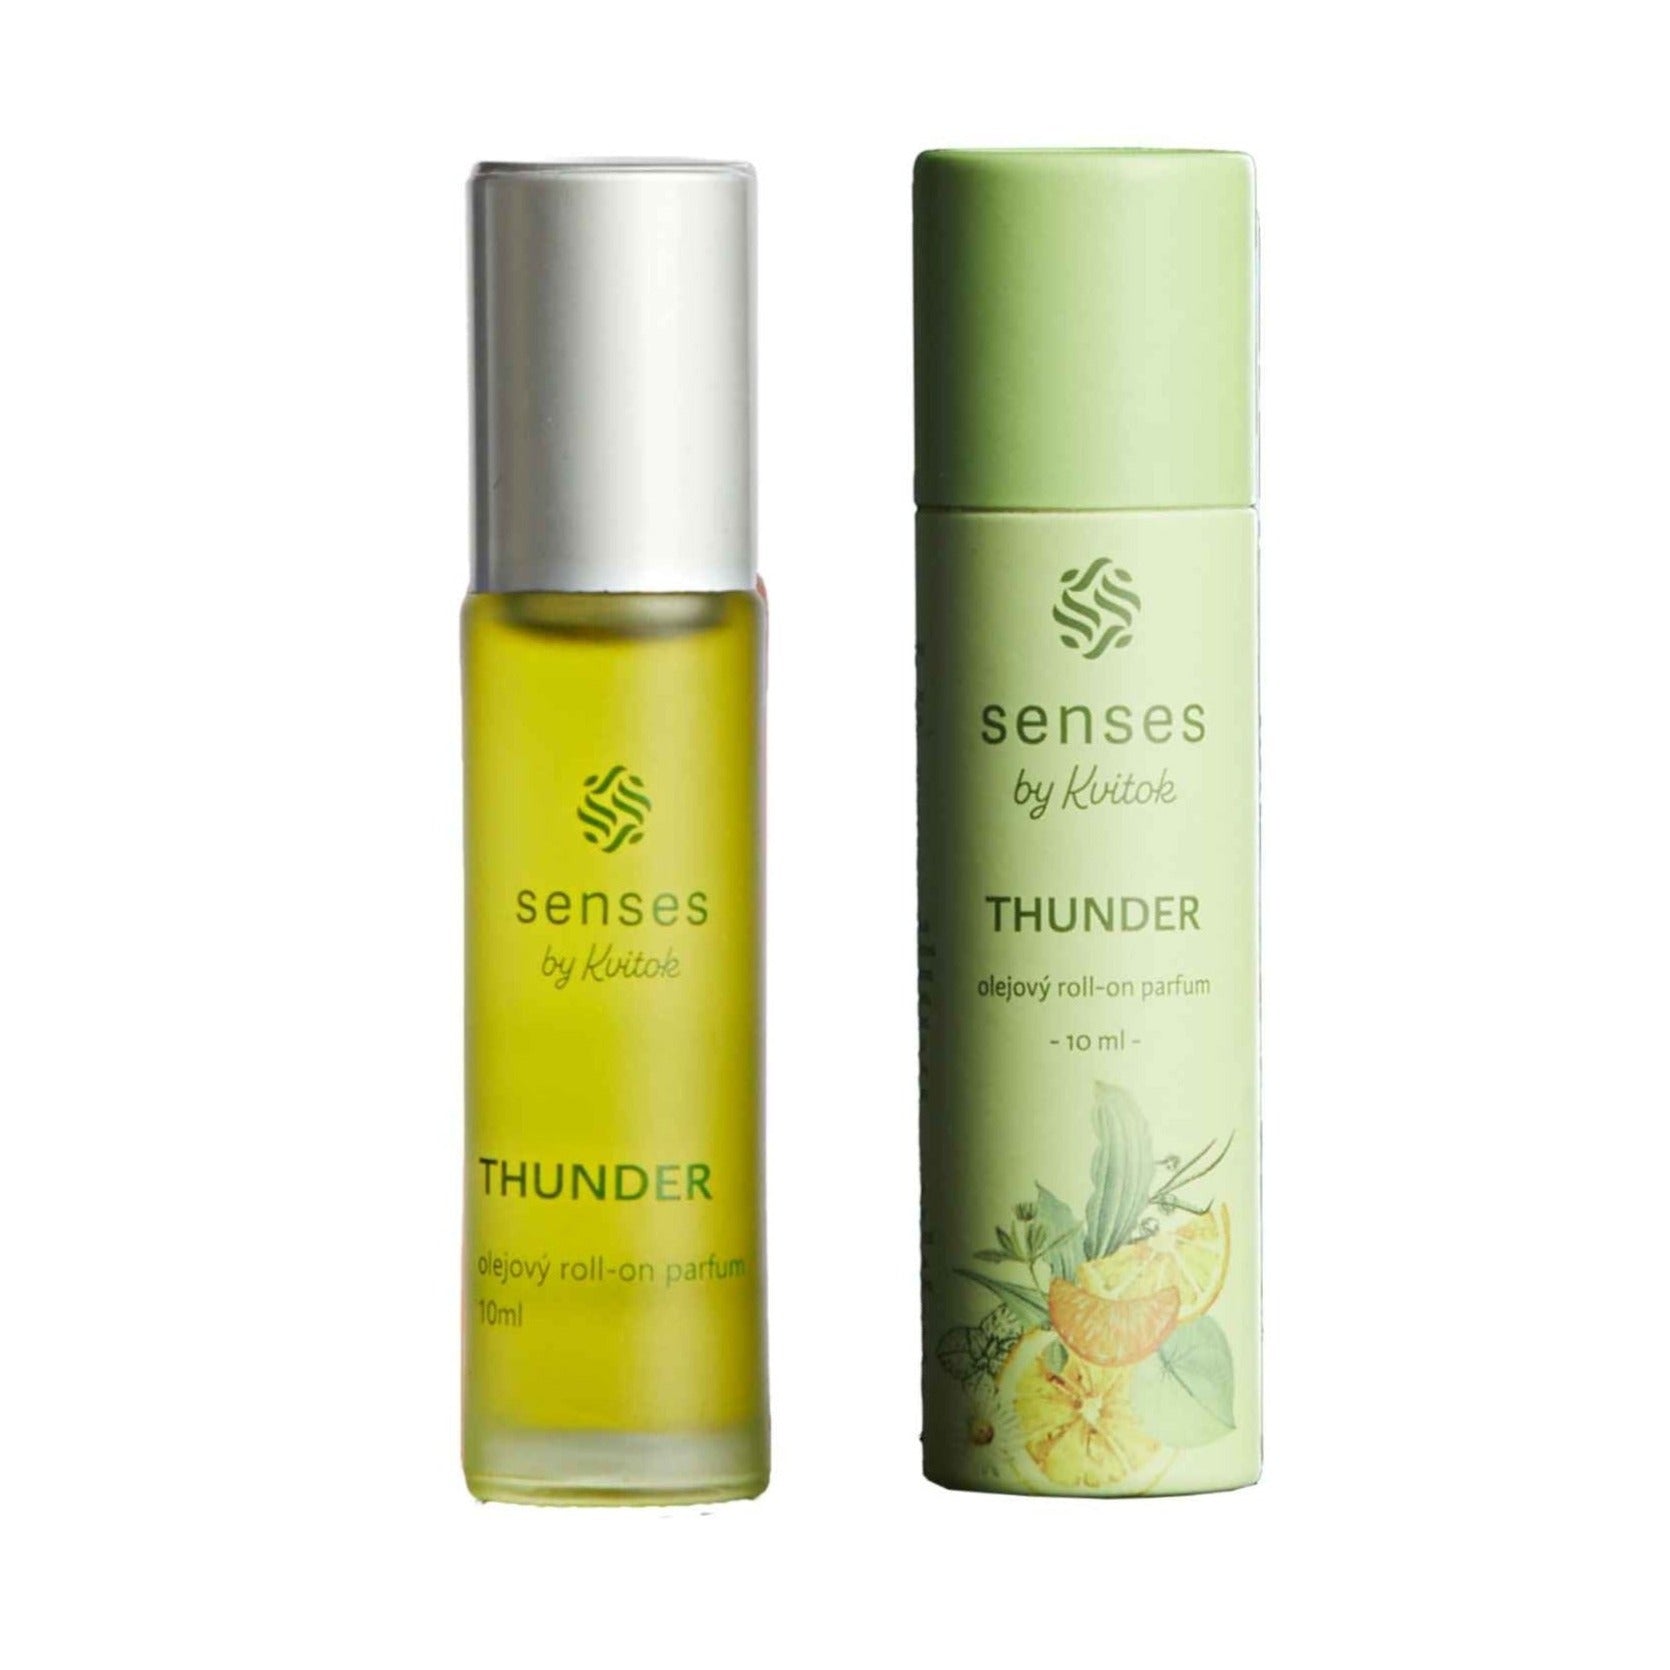 Kvitok Senses Roll-on olejový parfém Thunder (10 ml) - zelená unisex vůně Kvitok